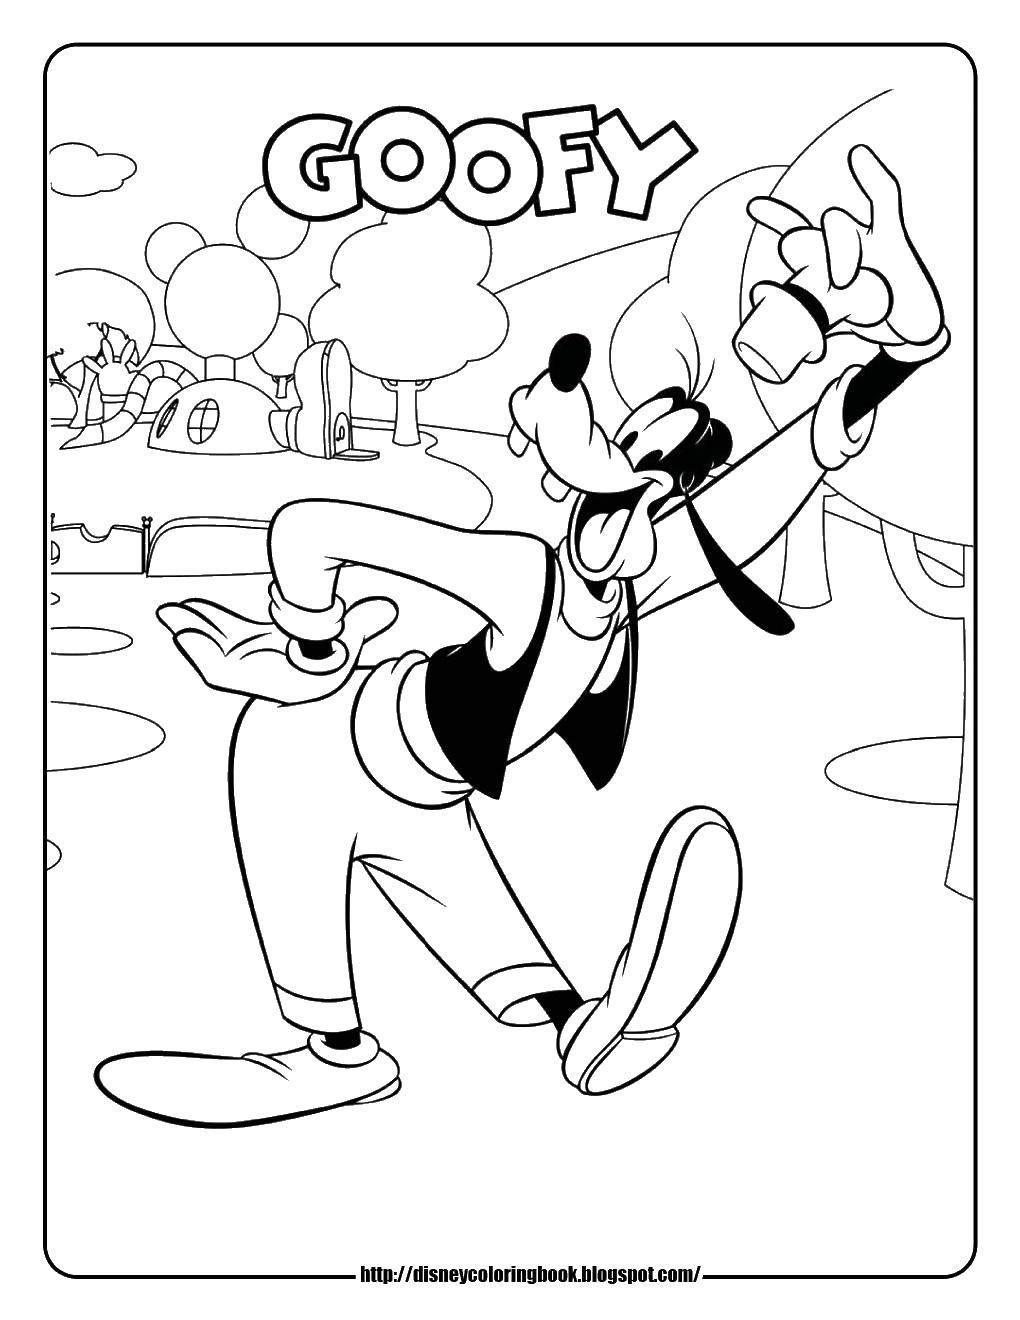 Coloring Goofy. Category cartoons. Tags:  cartoons Disney, goofy.